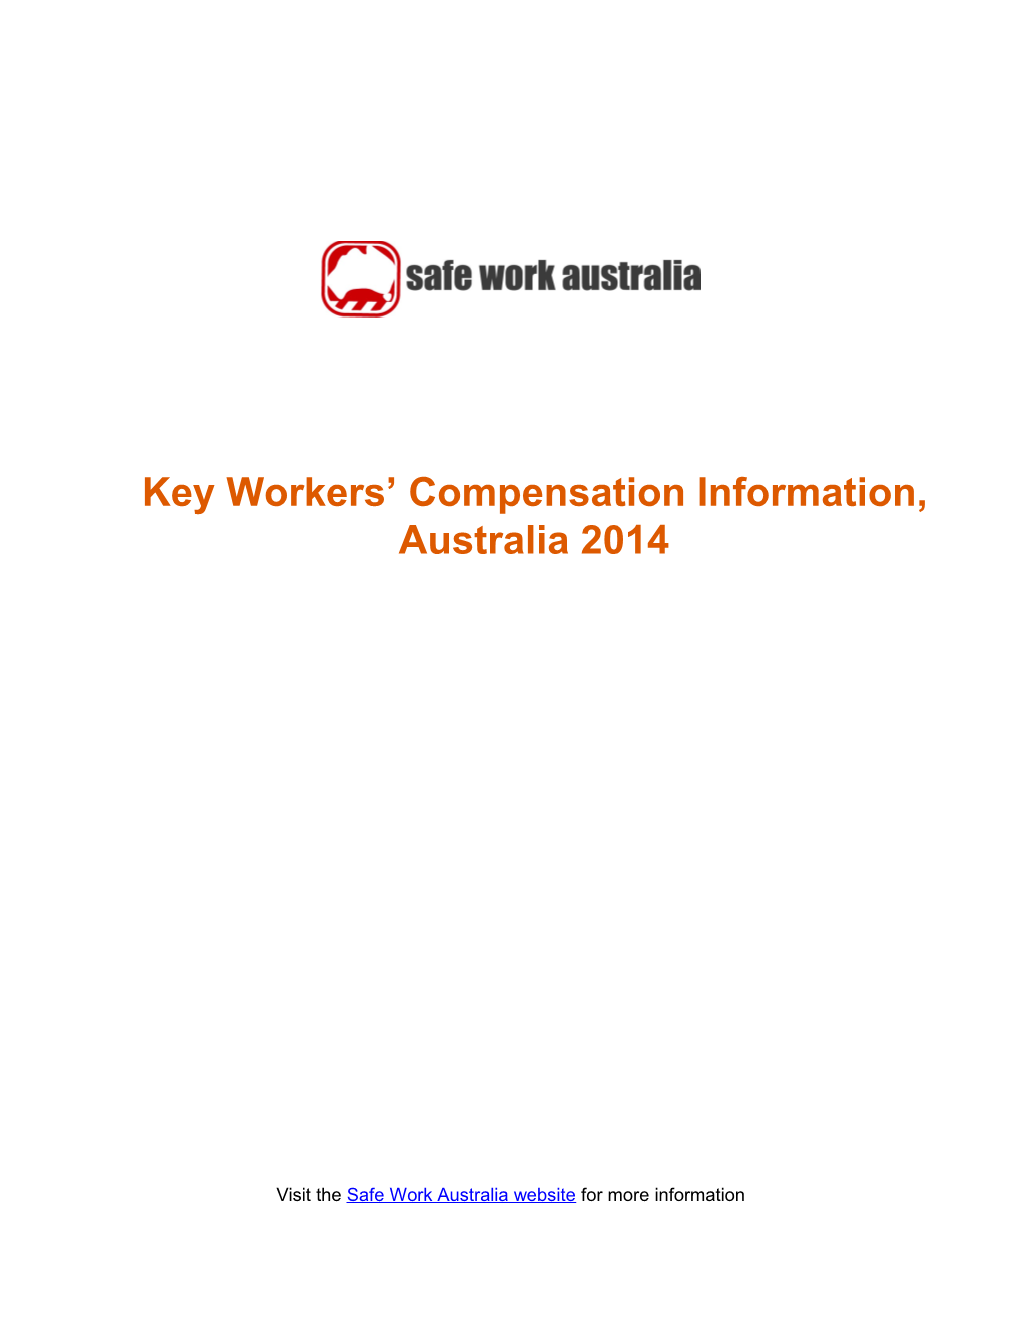 Key Workers' Compensation Information, Australia 2014